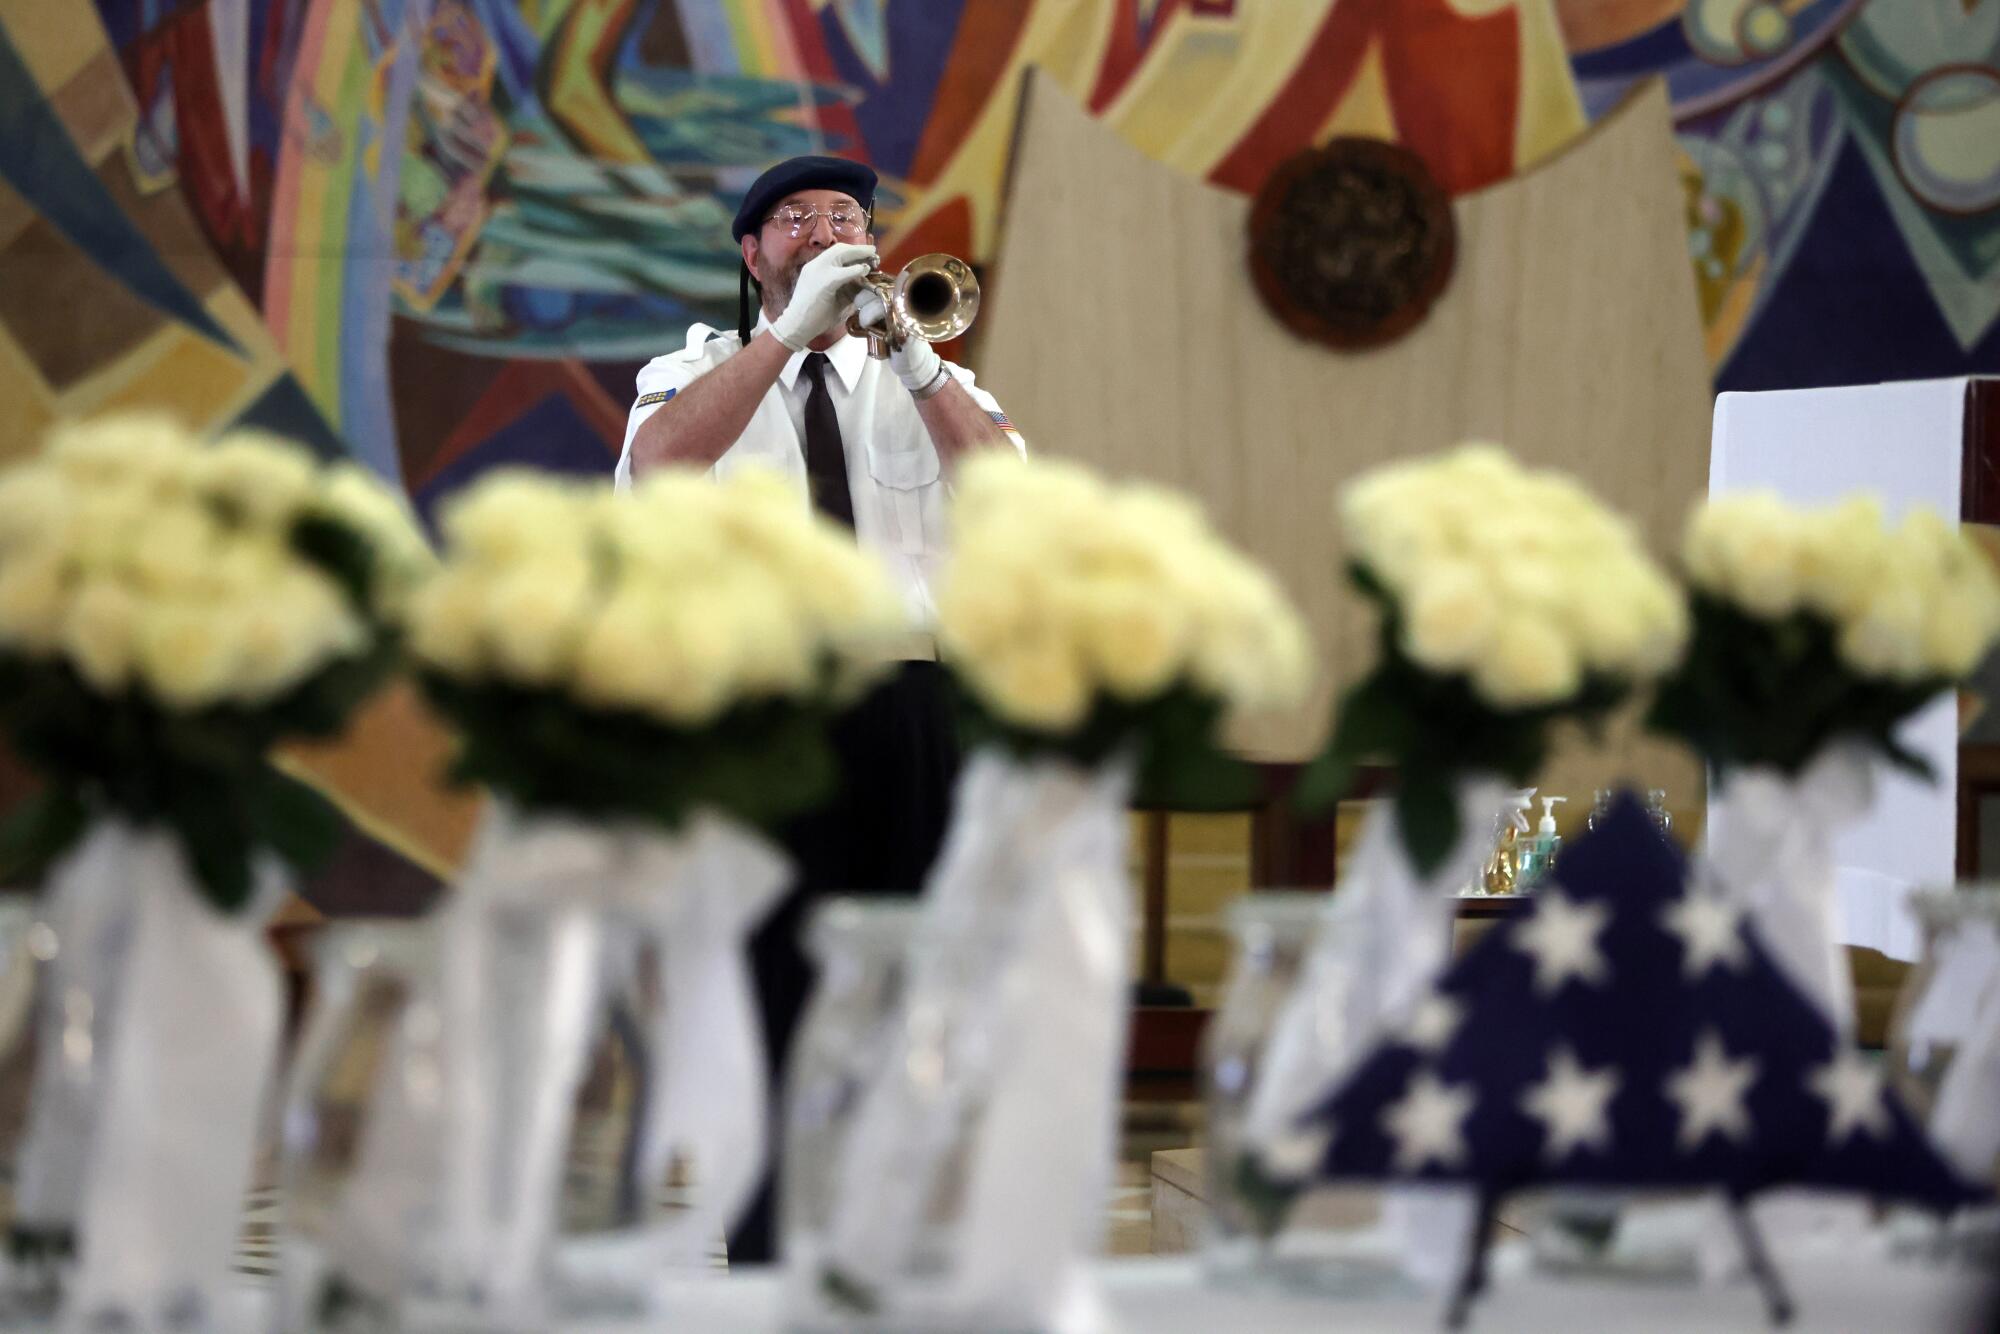 A bugler plays taps during a Memorial Day Mass.